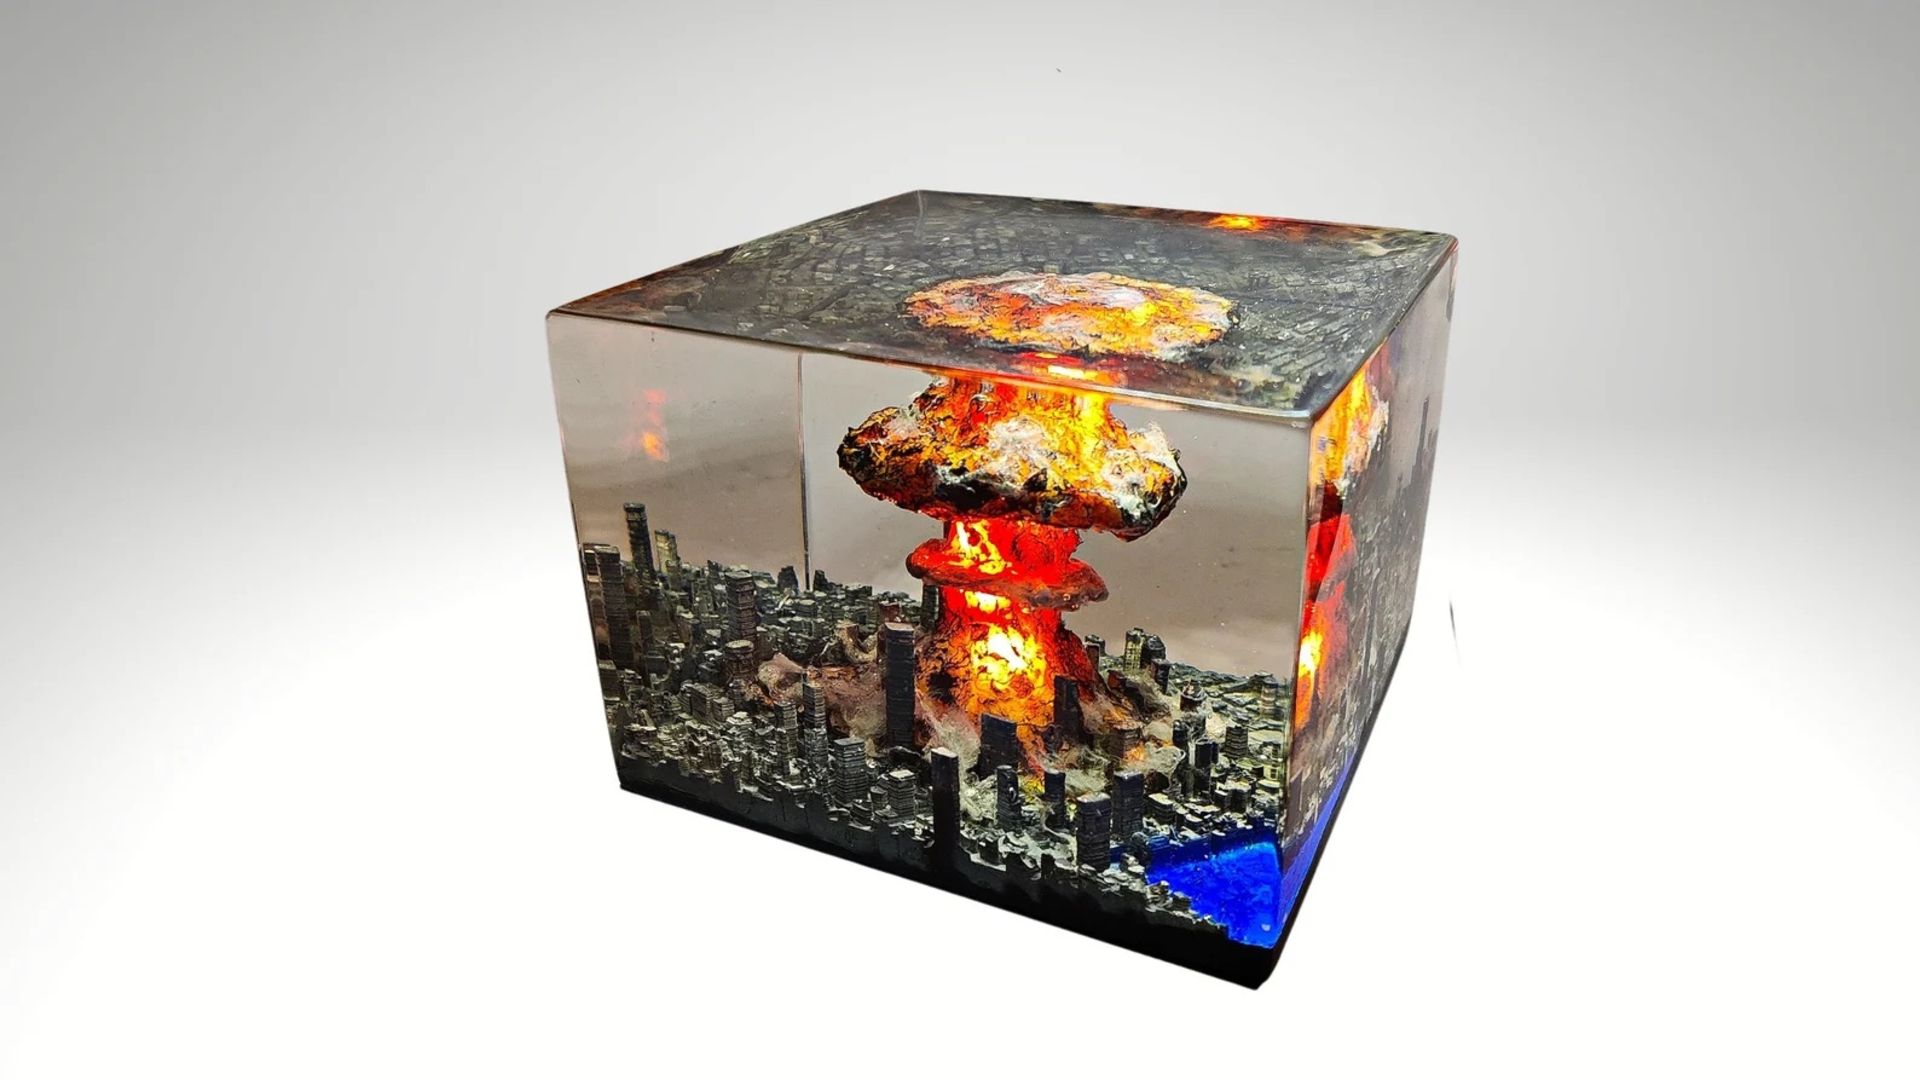 Atomic Bomb Resin Sculpture - Image 3 of 3